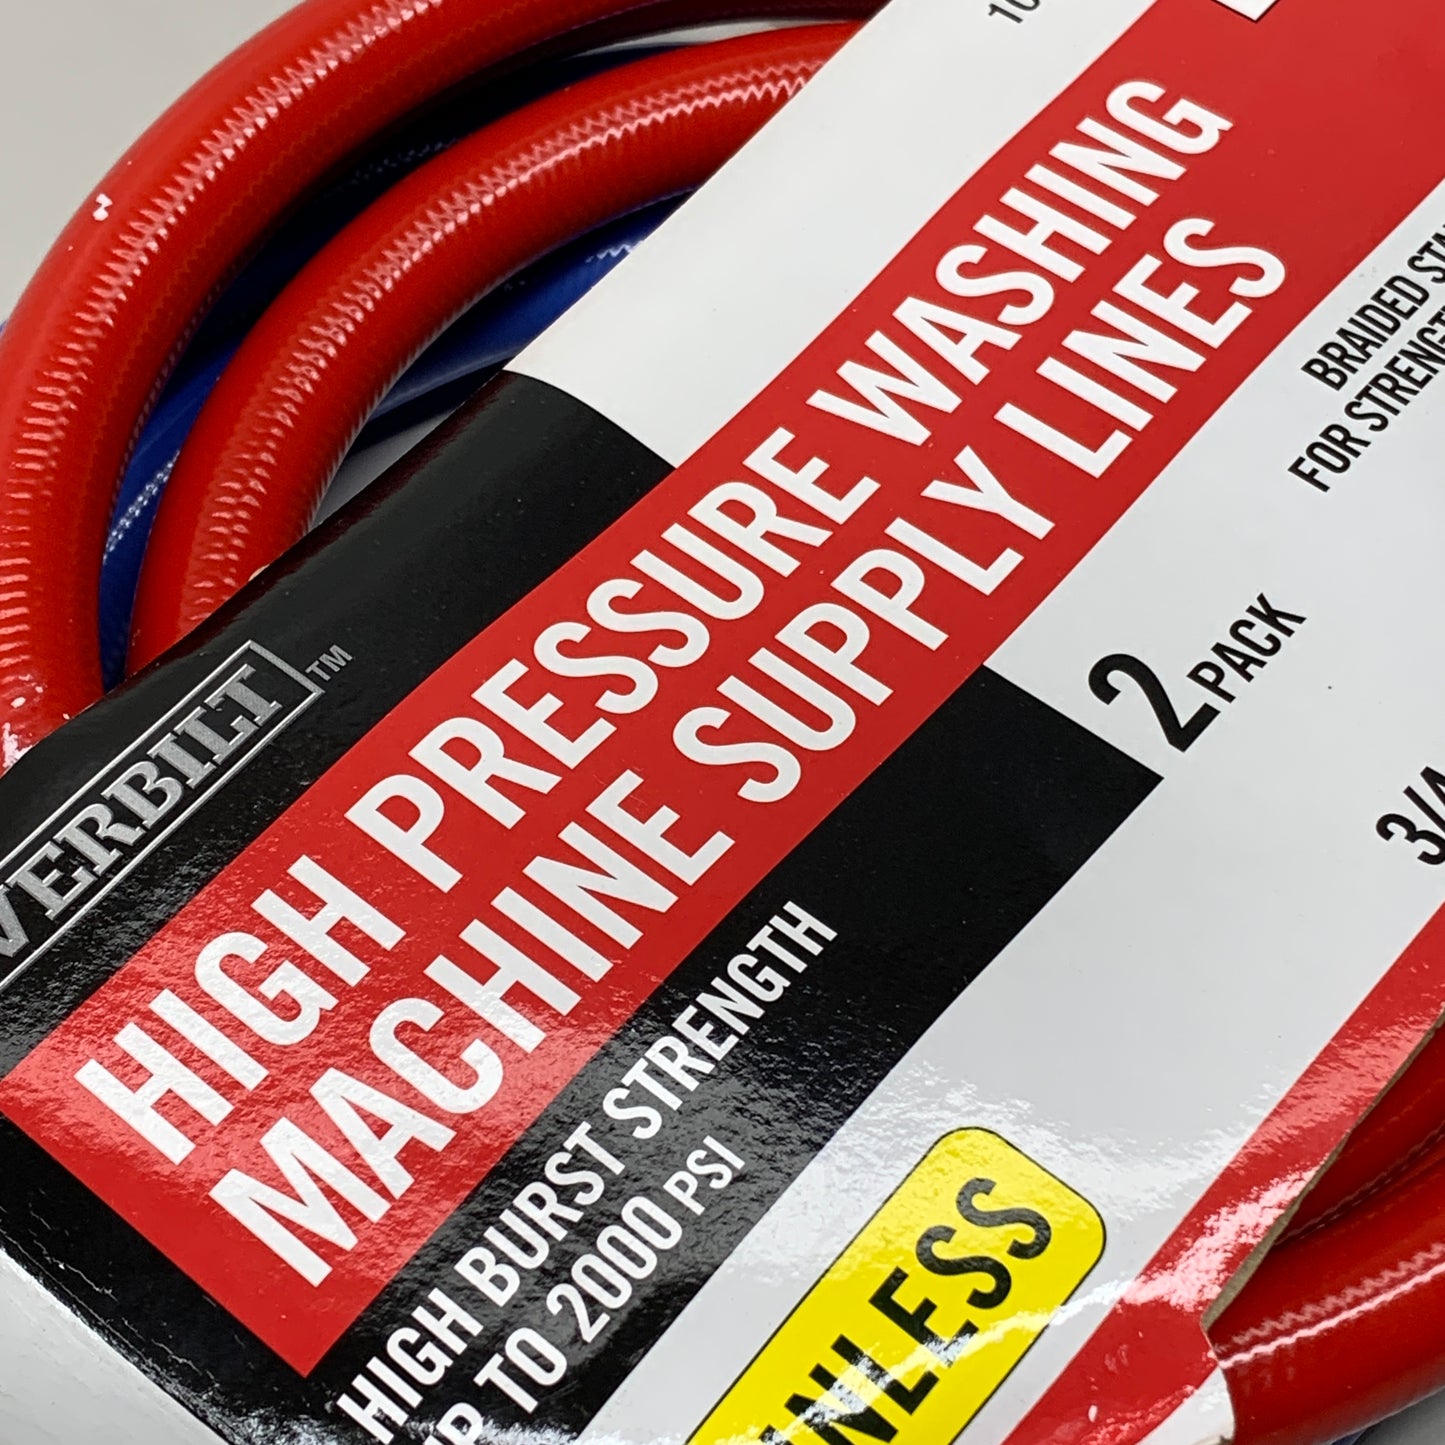 EVERBILT (2 PACK) High Pressure 3/4” Washing Machine Supply Lines 6ft Red/Blue 98290